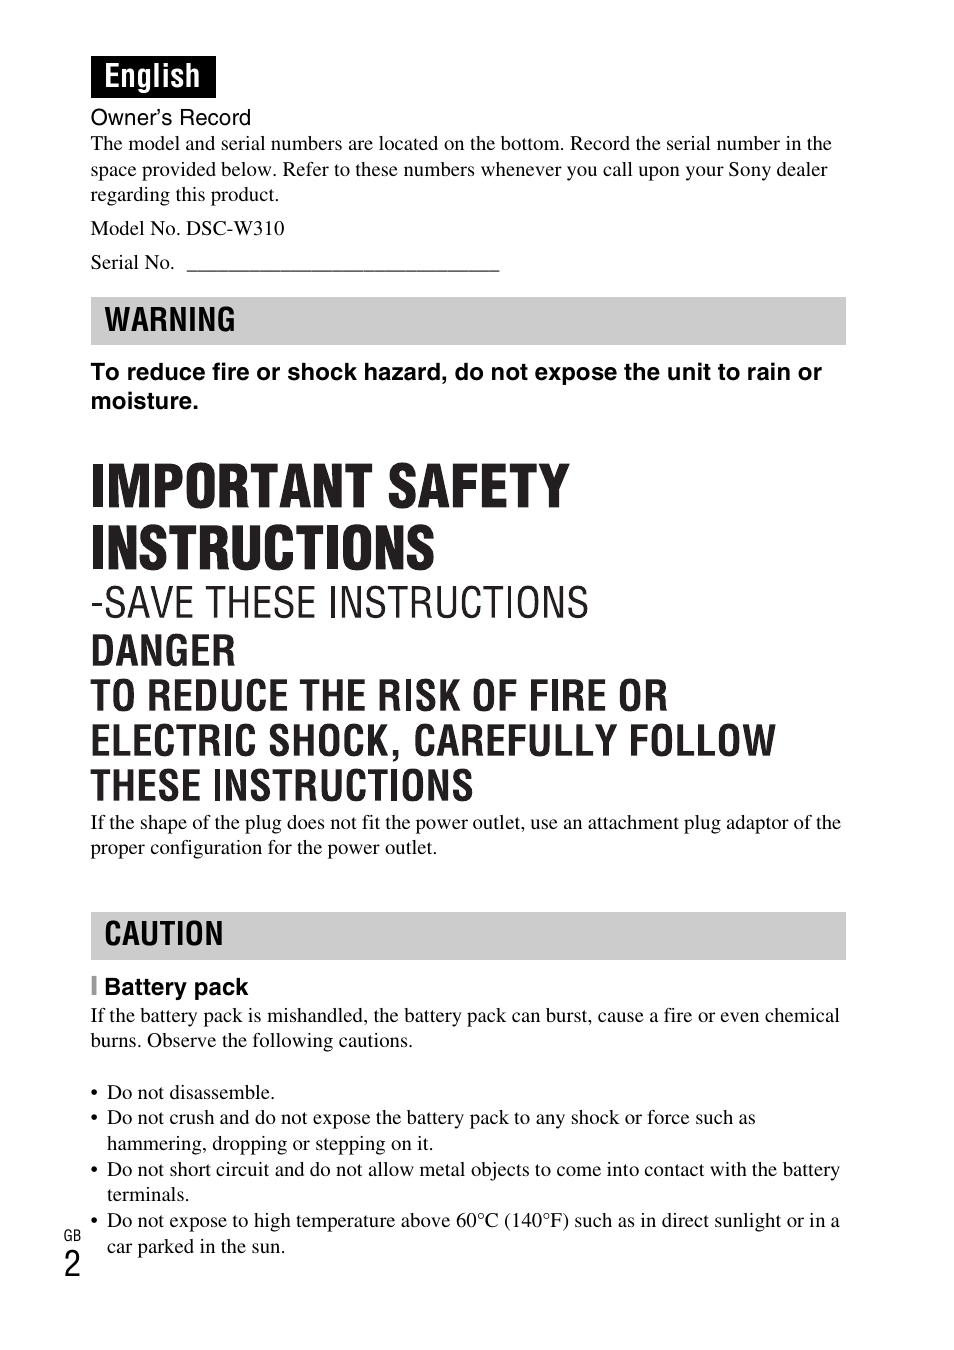 English, English warning caution | Sony DSC-W310 User Manual | Page 2 / 56